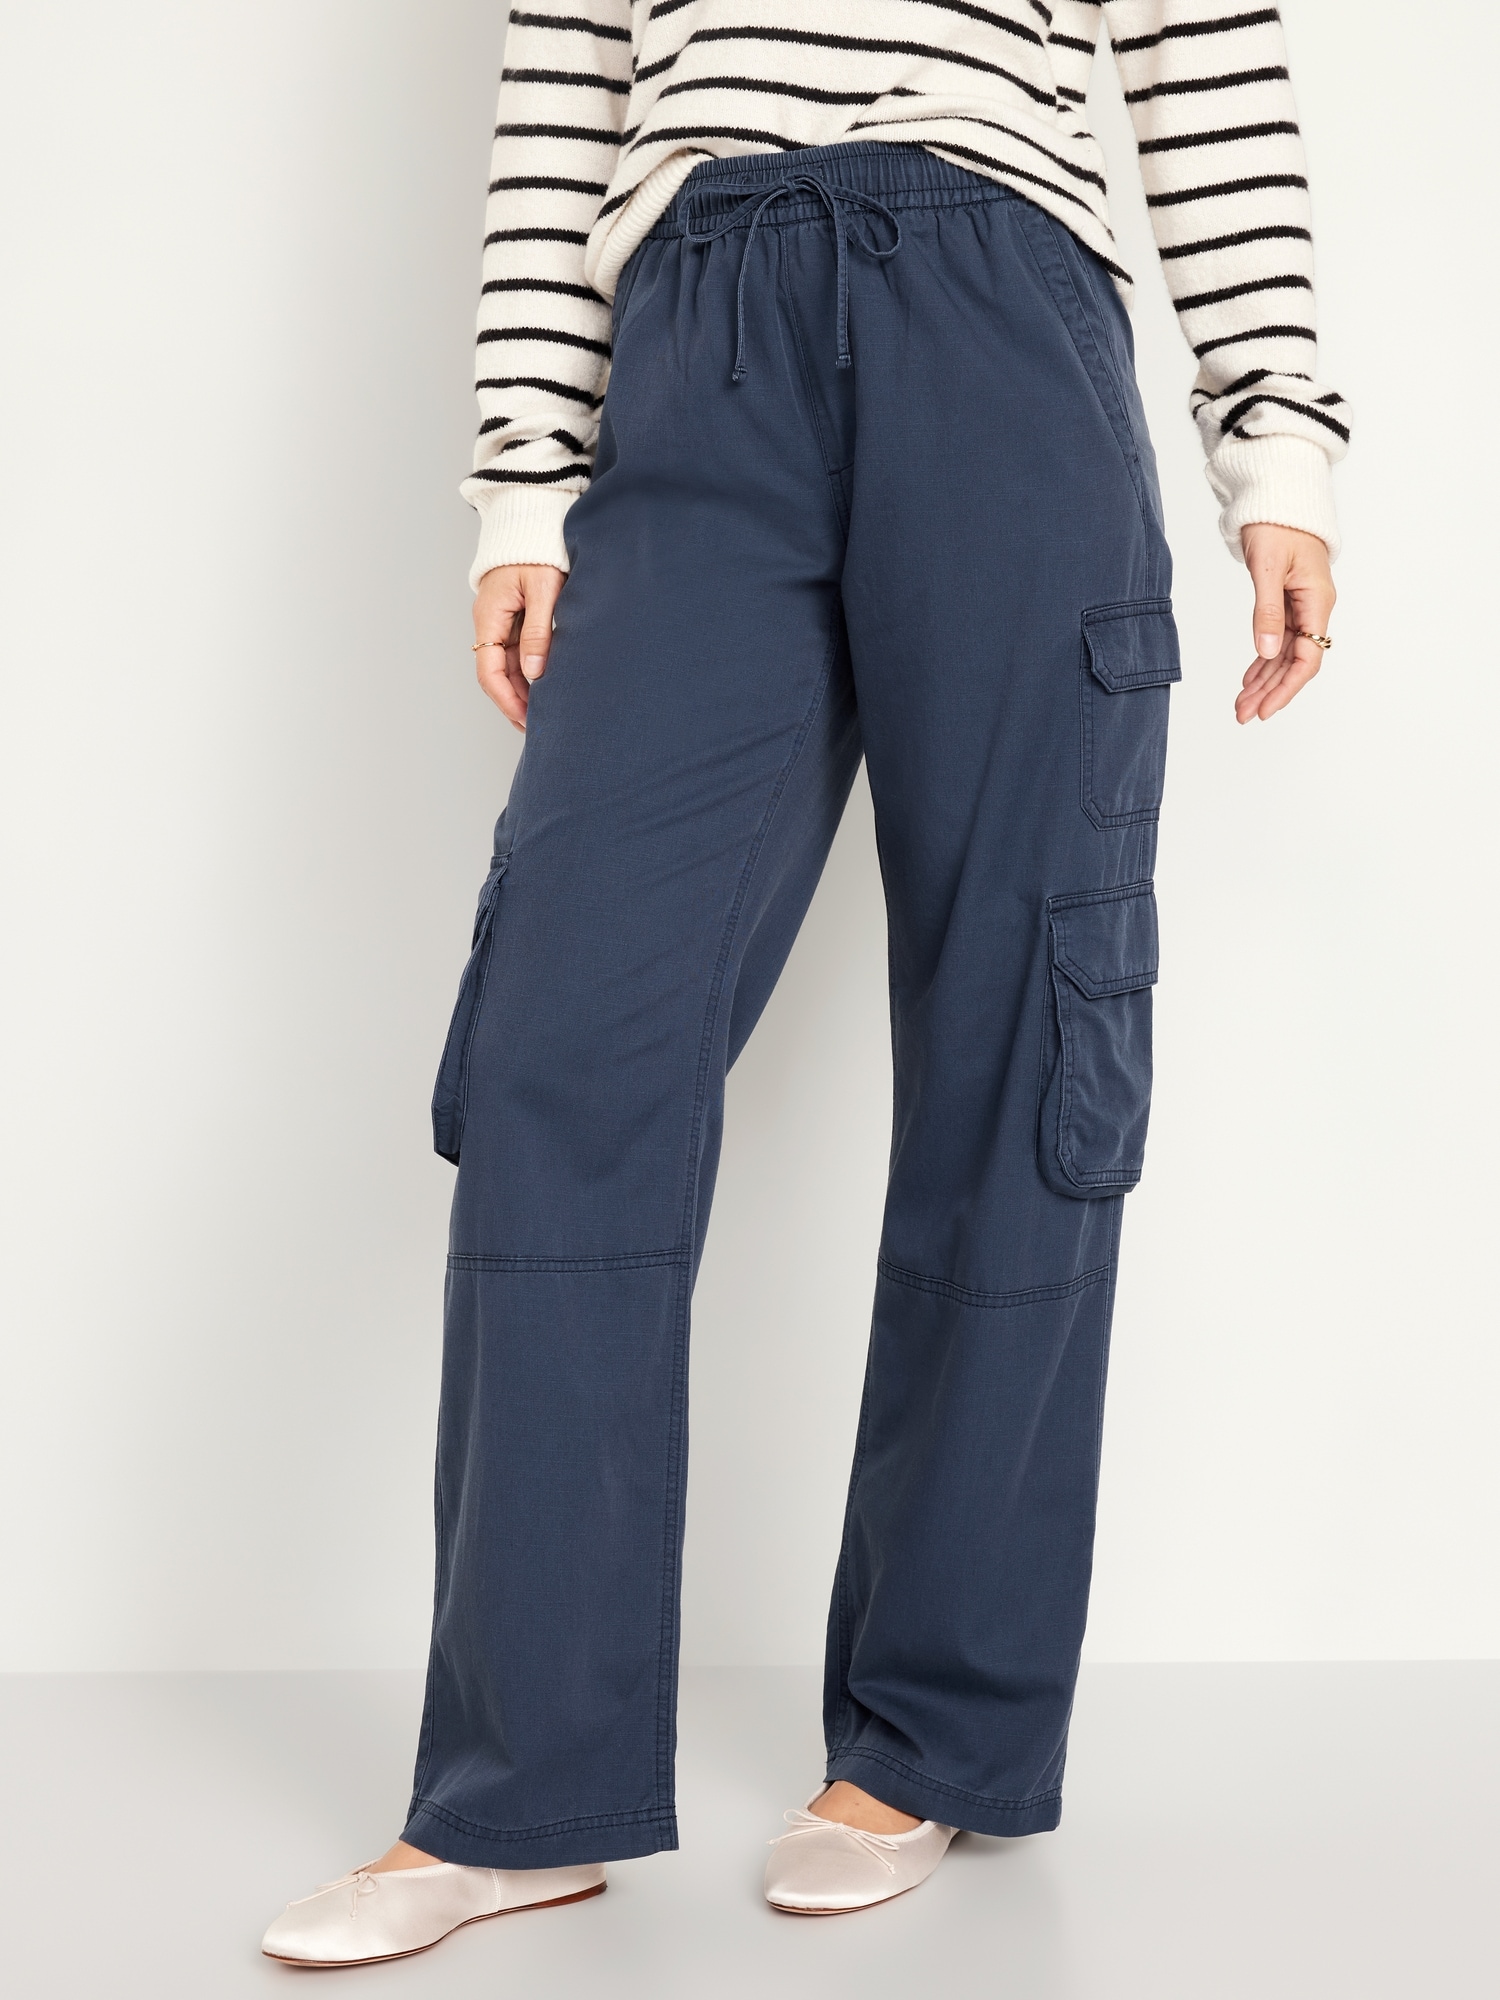 Joe Fresh Women's sz 6 blue navy Pocket Drawstring Cargo Pants convertible  33x28